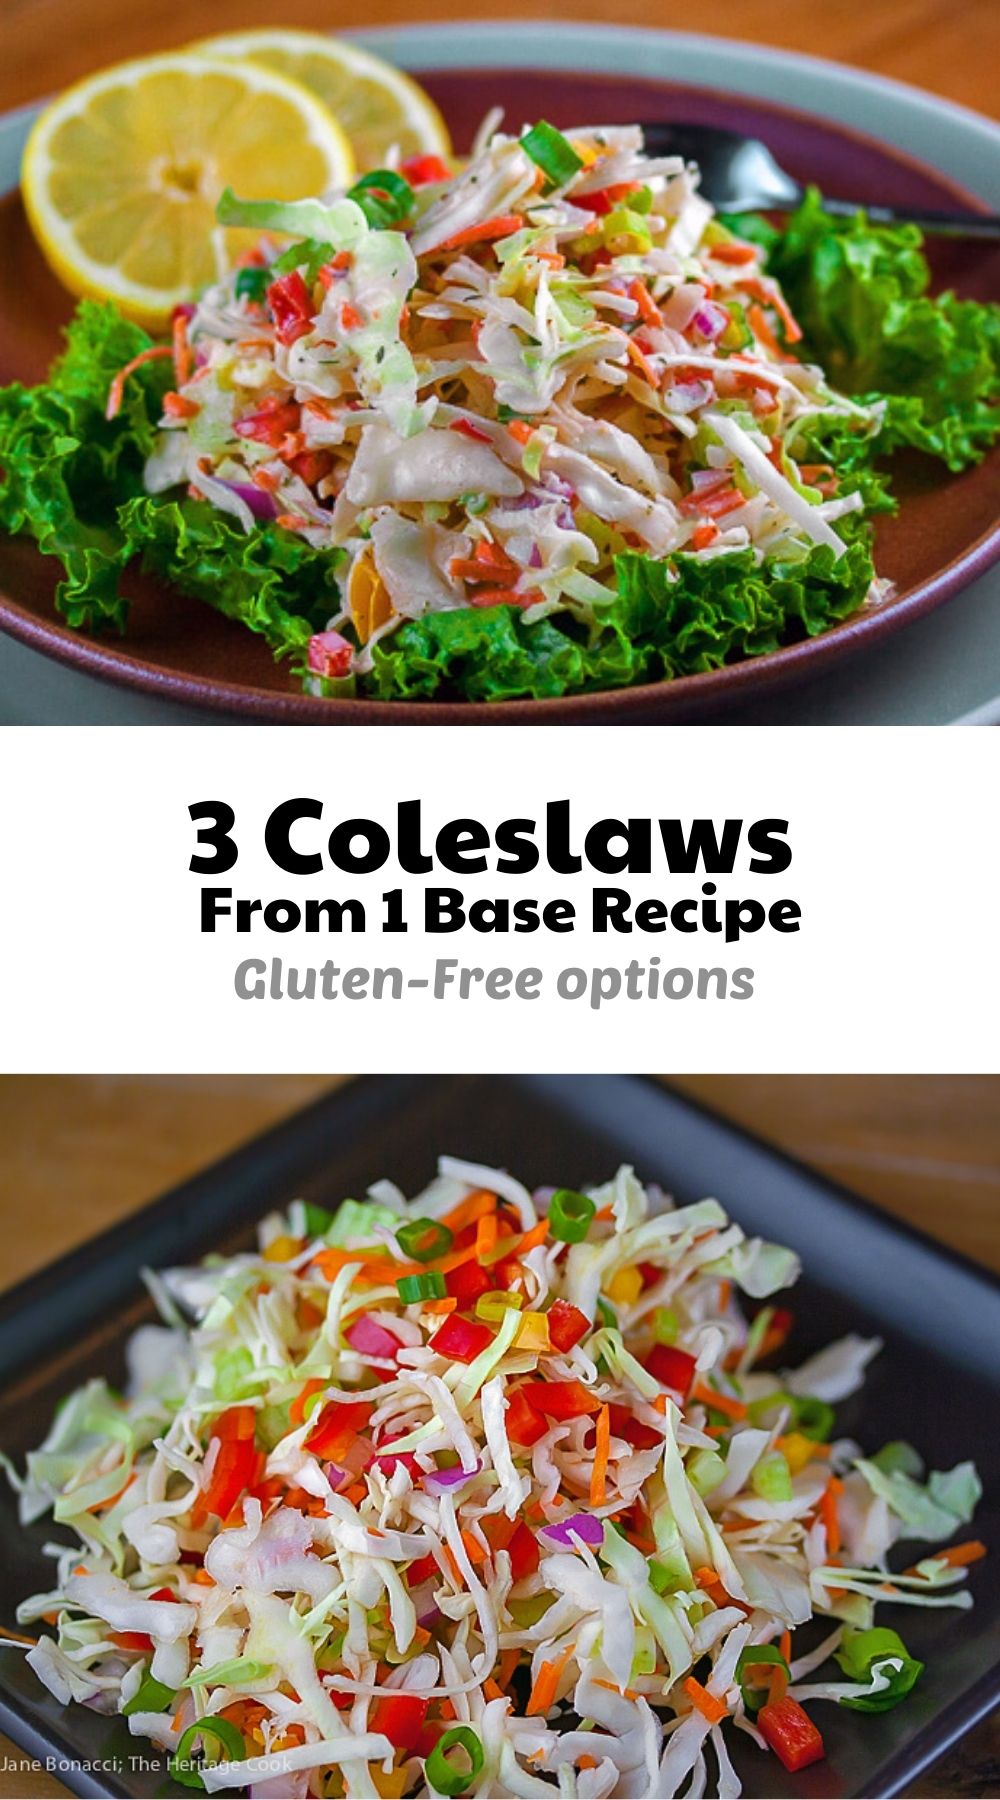 Variations on Coleslaw - One coleslaw, 3 dressings - Make it your way; © 2021 Jane Bonacci, The Heritage Cook